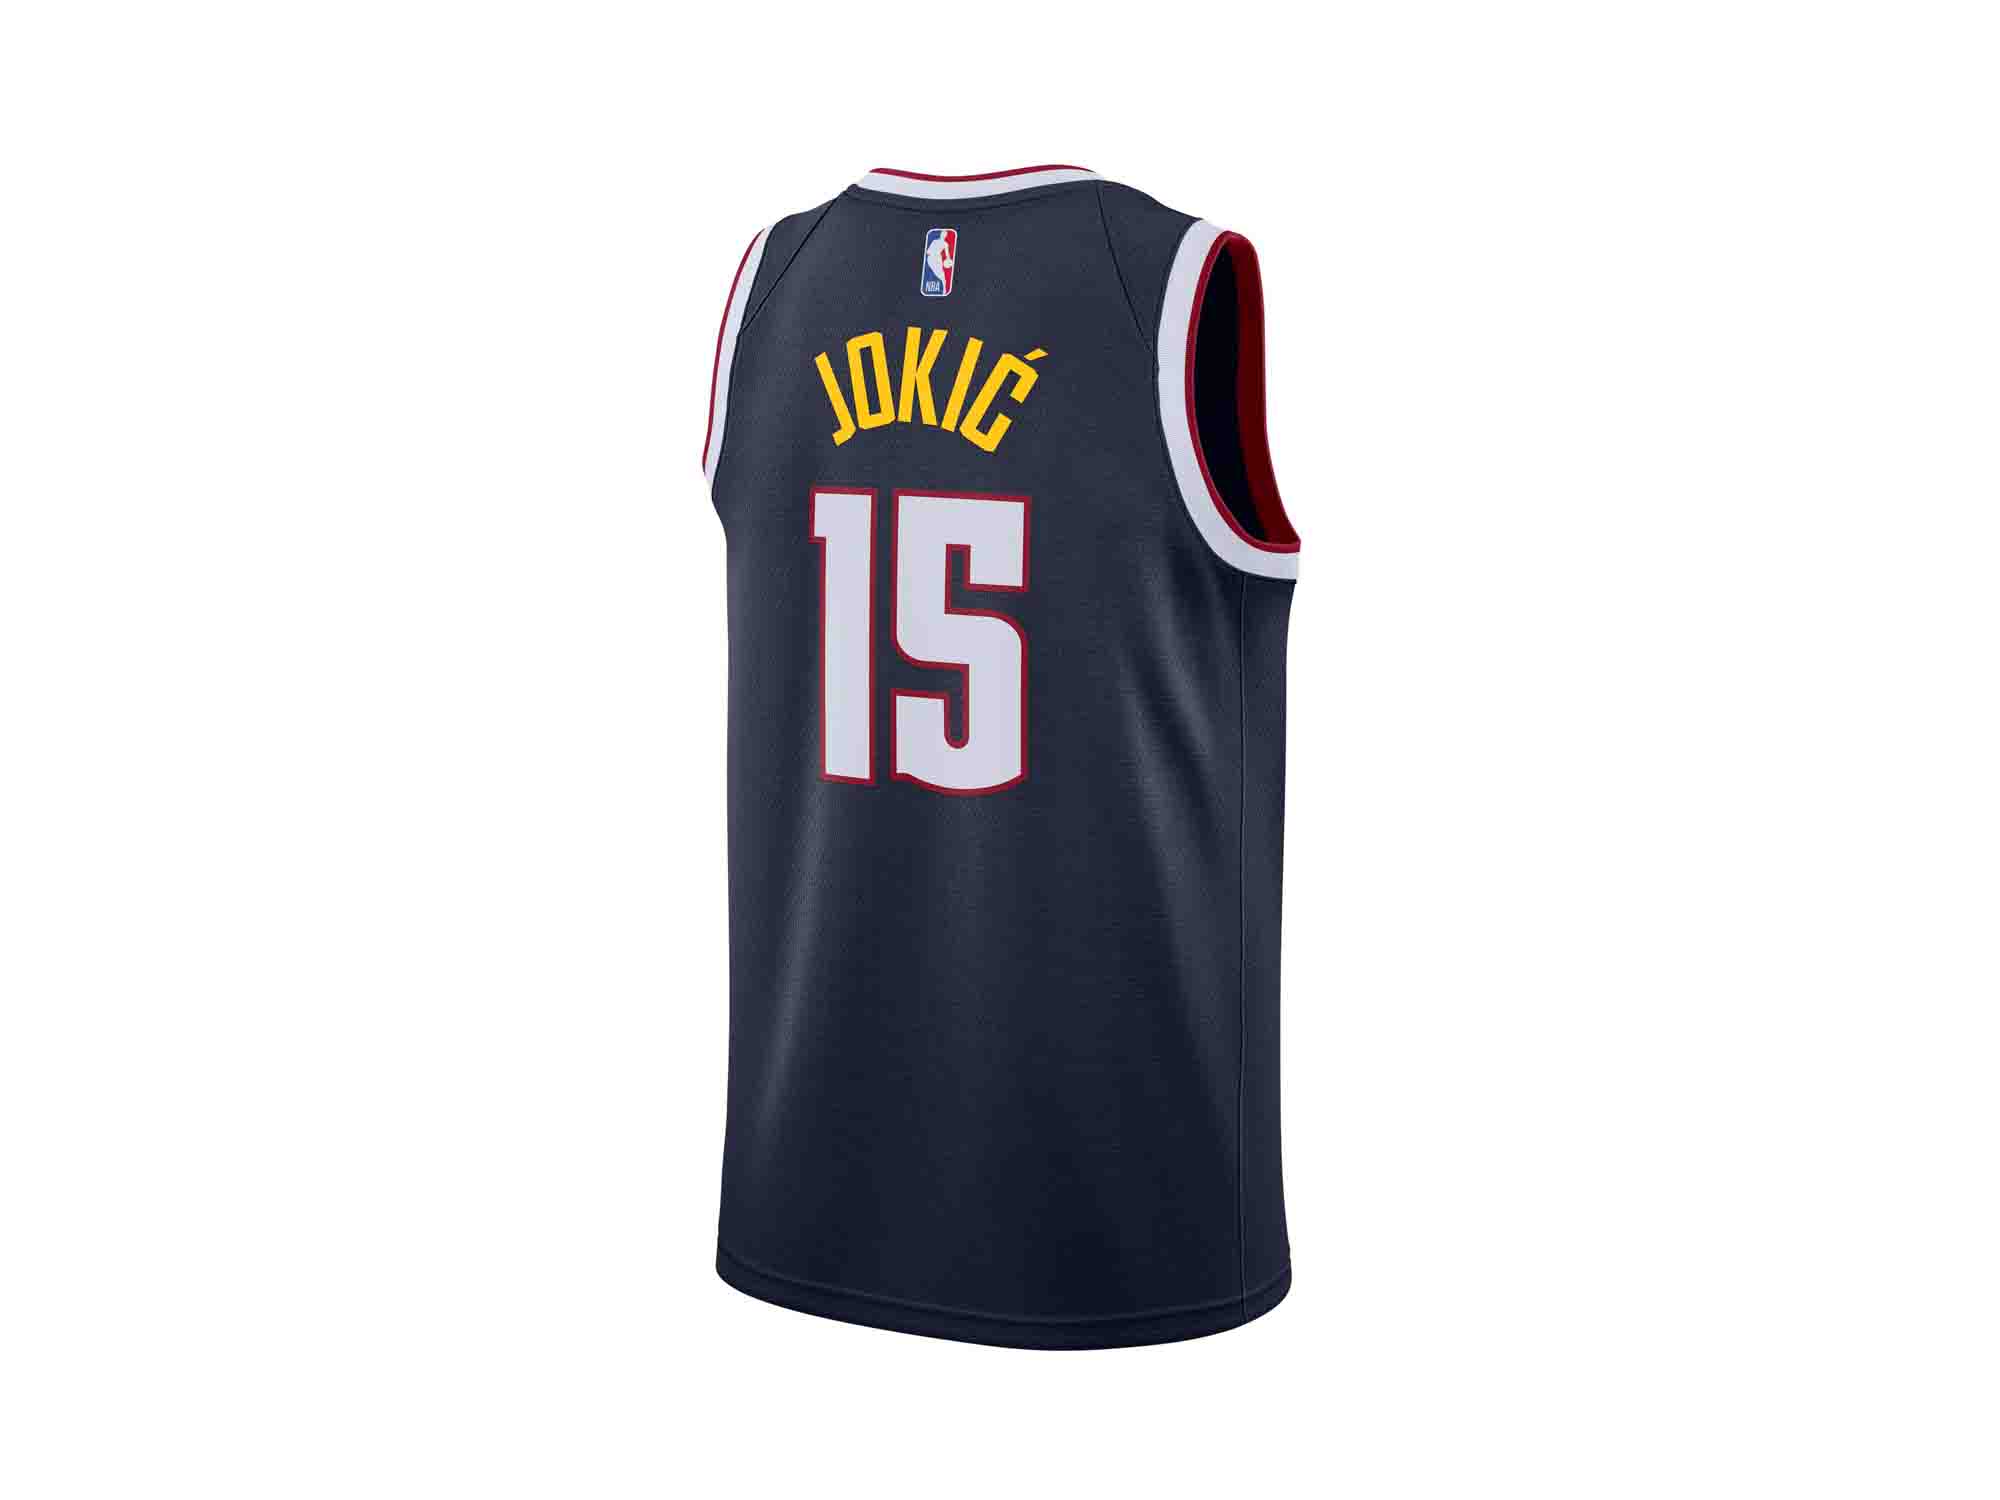 Nike Nikola Jokic NBA Icon Edition 2020 Swingman Jersey